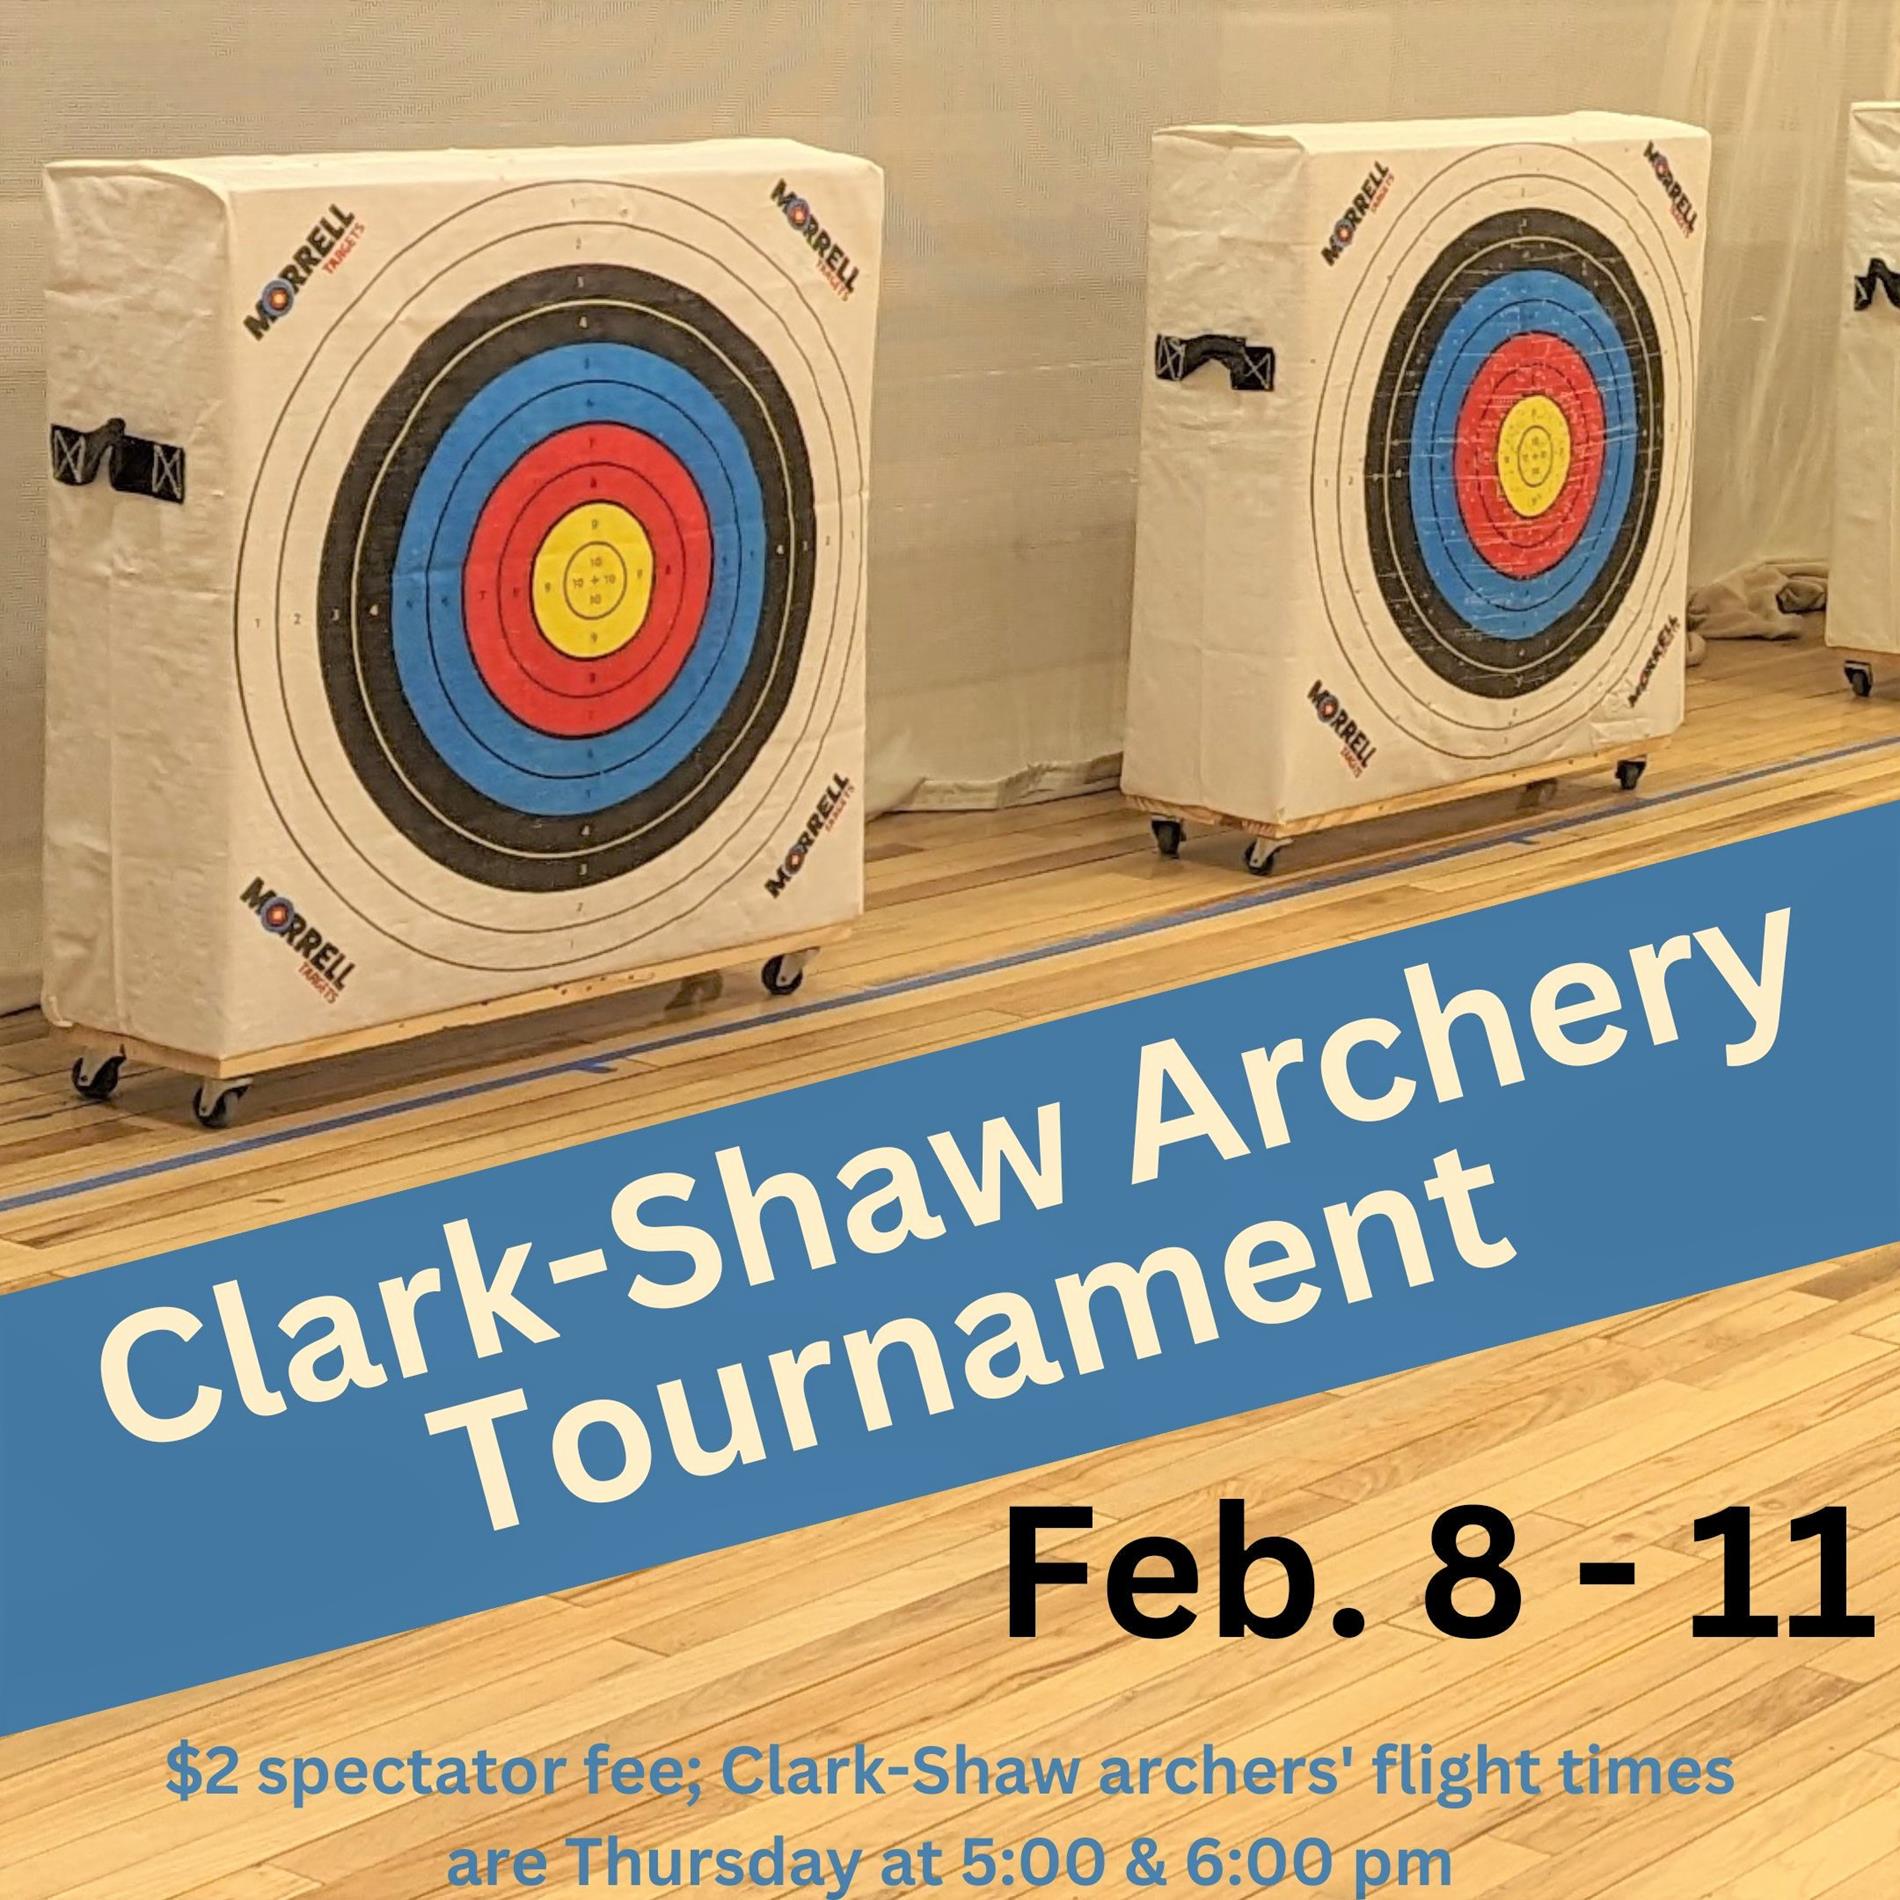 Archery tournament